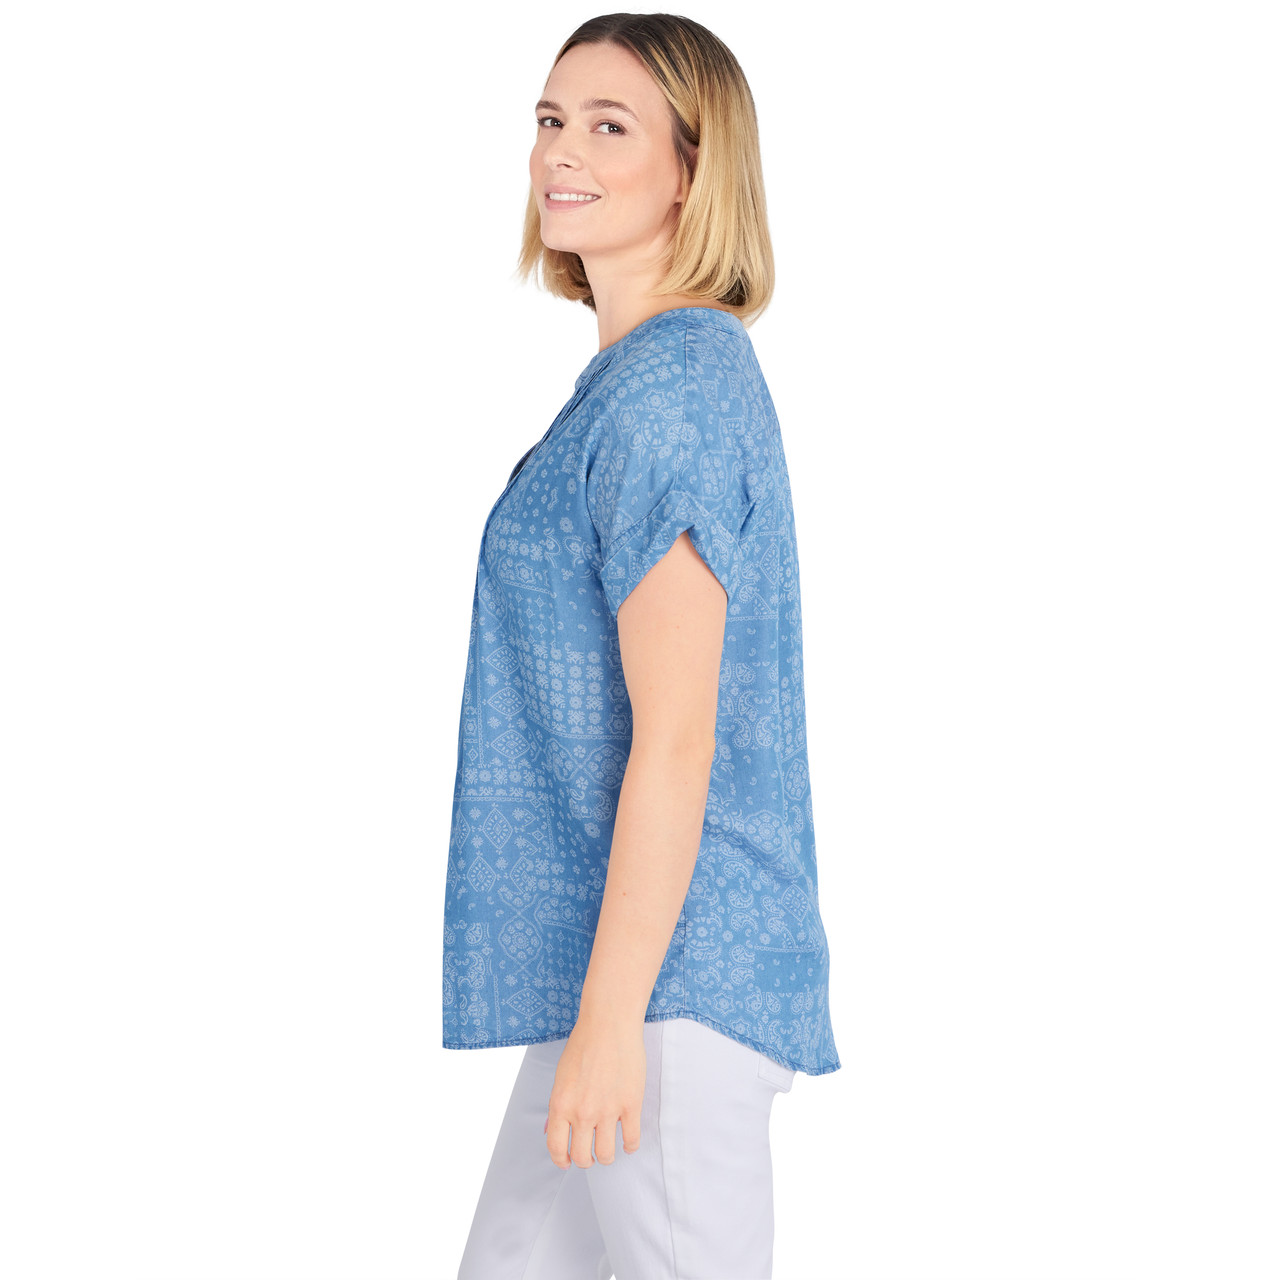  Bandana Print T-shirt Short Sleeve Tee Shirt Blue